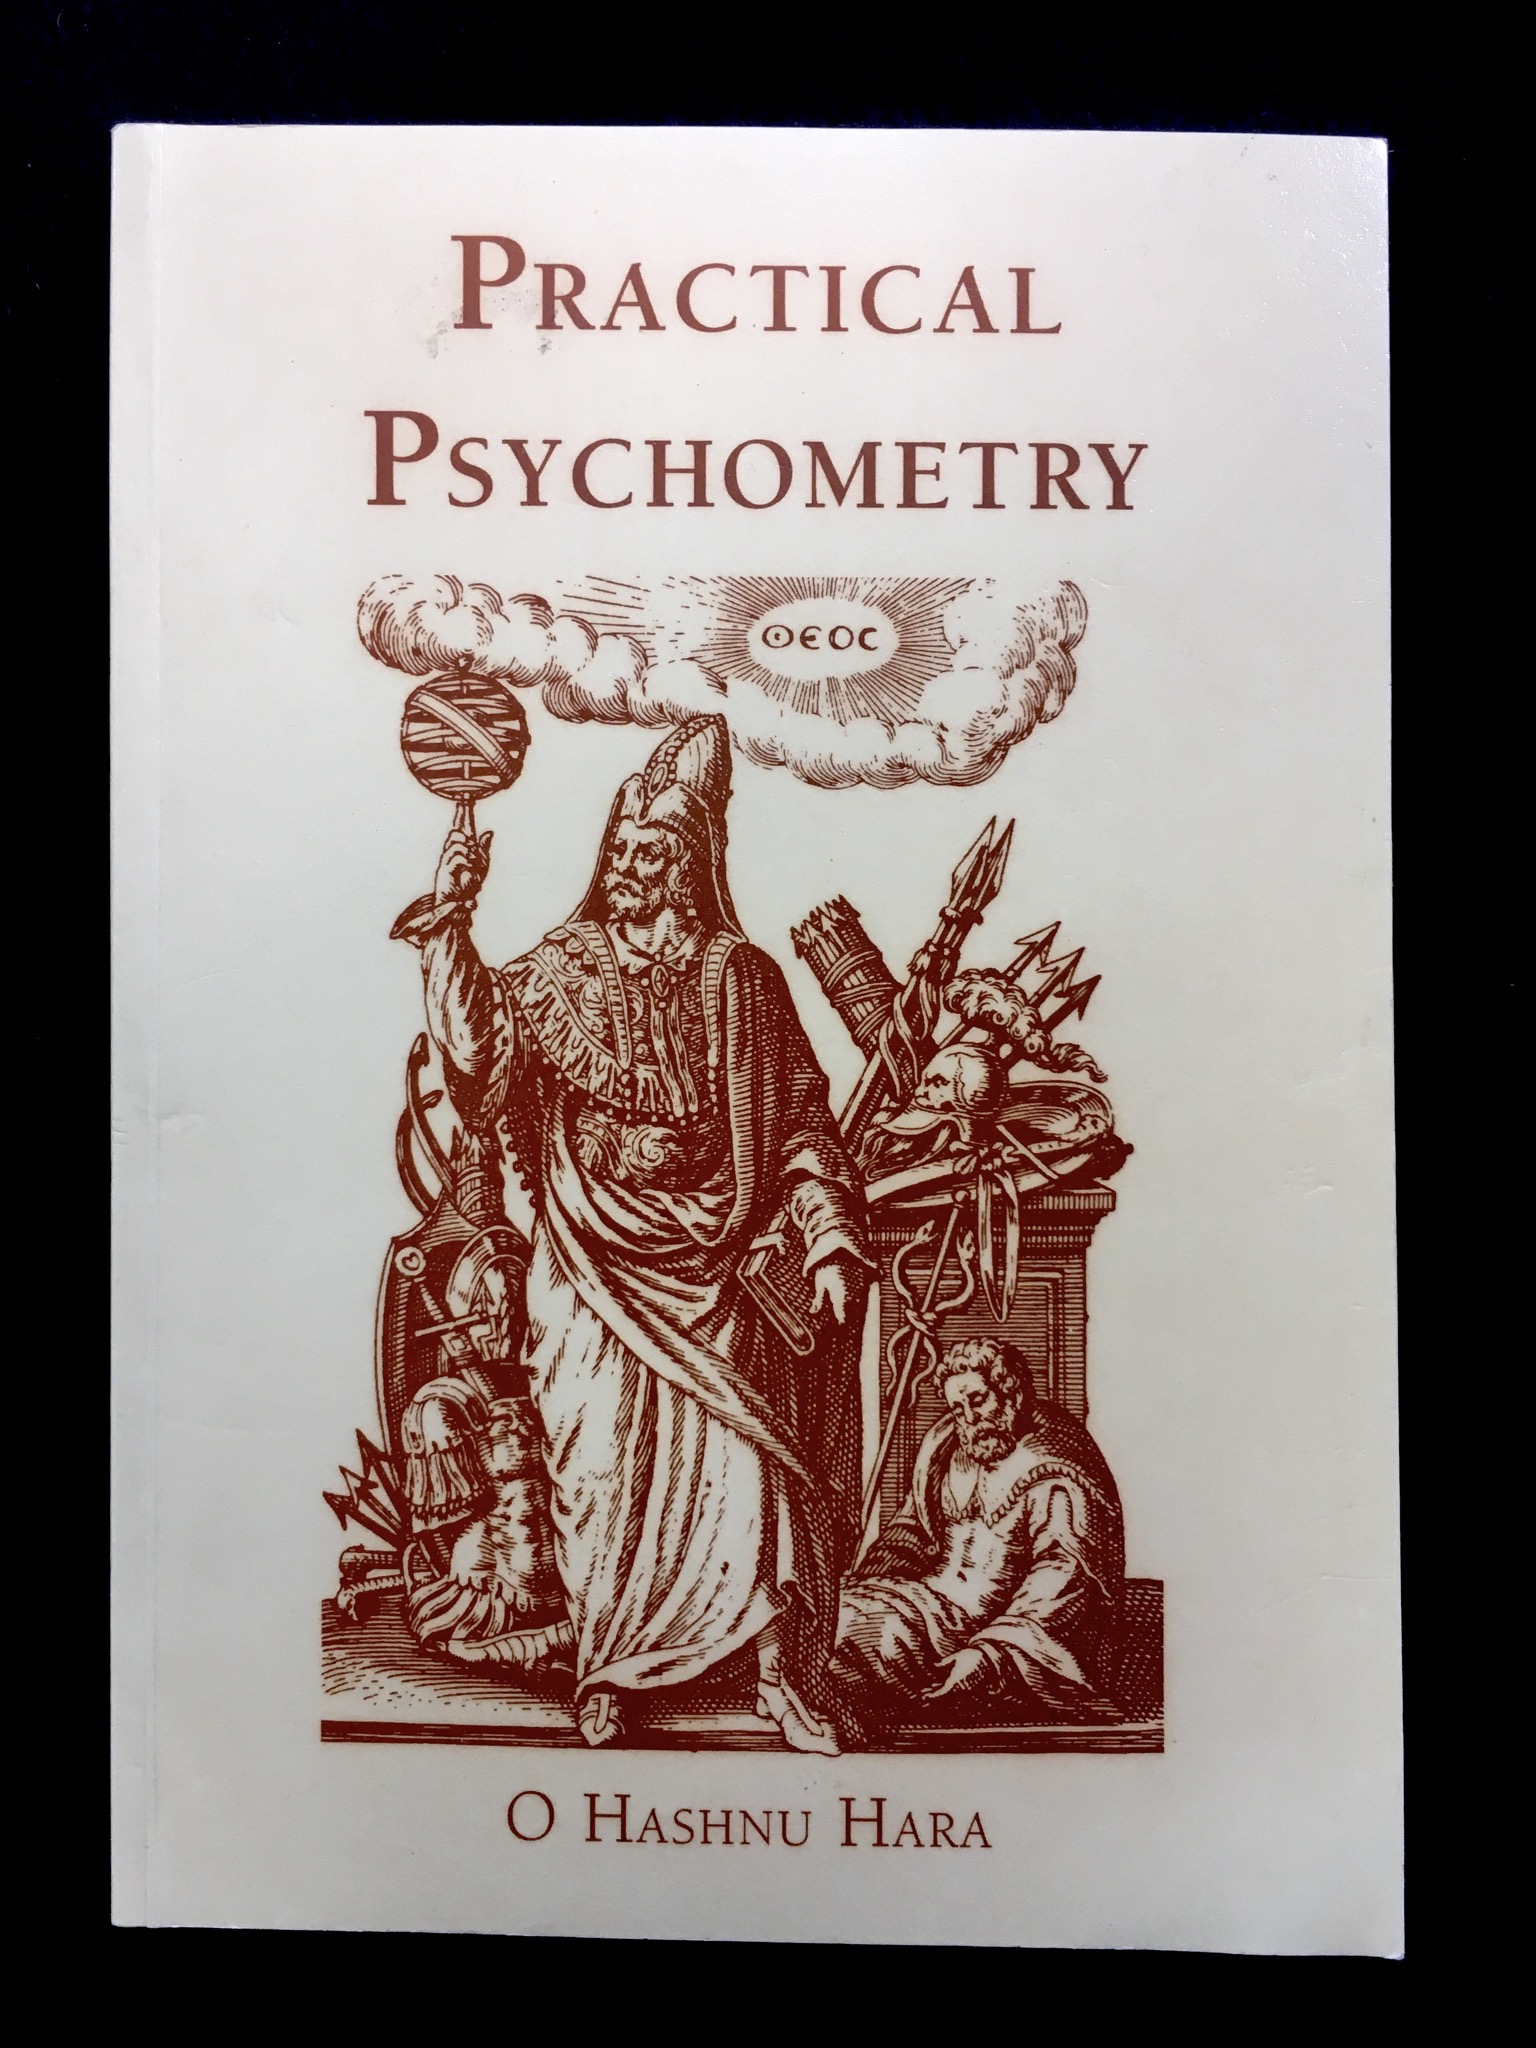 Practical Psychometry by O Hashnu Hara